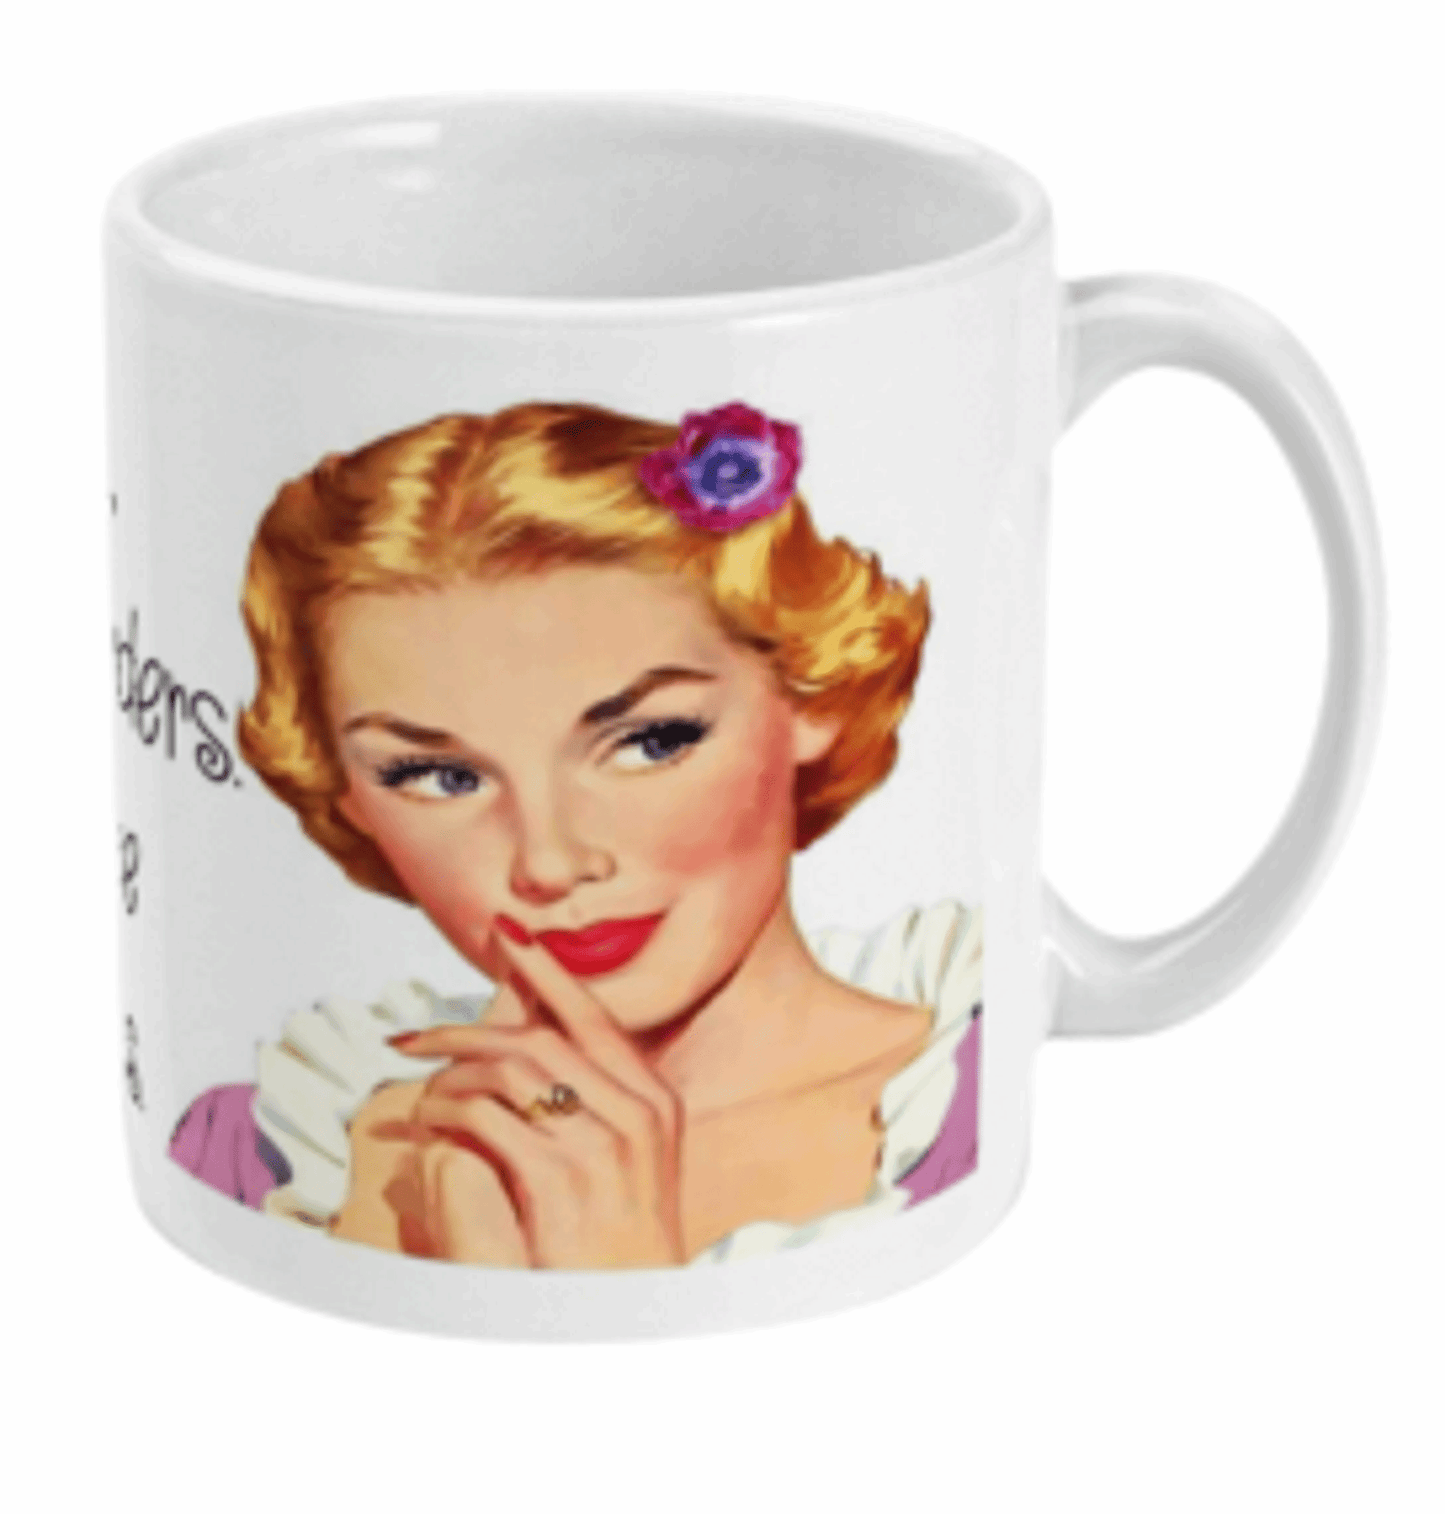  Oh Darling Vintage Lady Coffee Mug by Free Spirit Accessories sold by Free Spirit Accessories